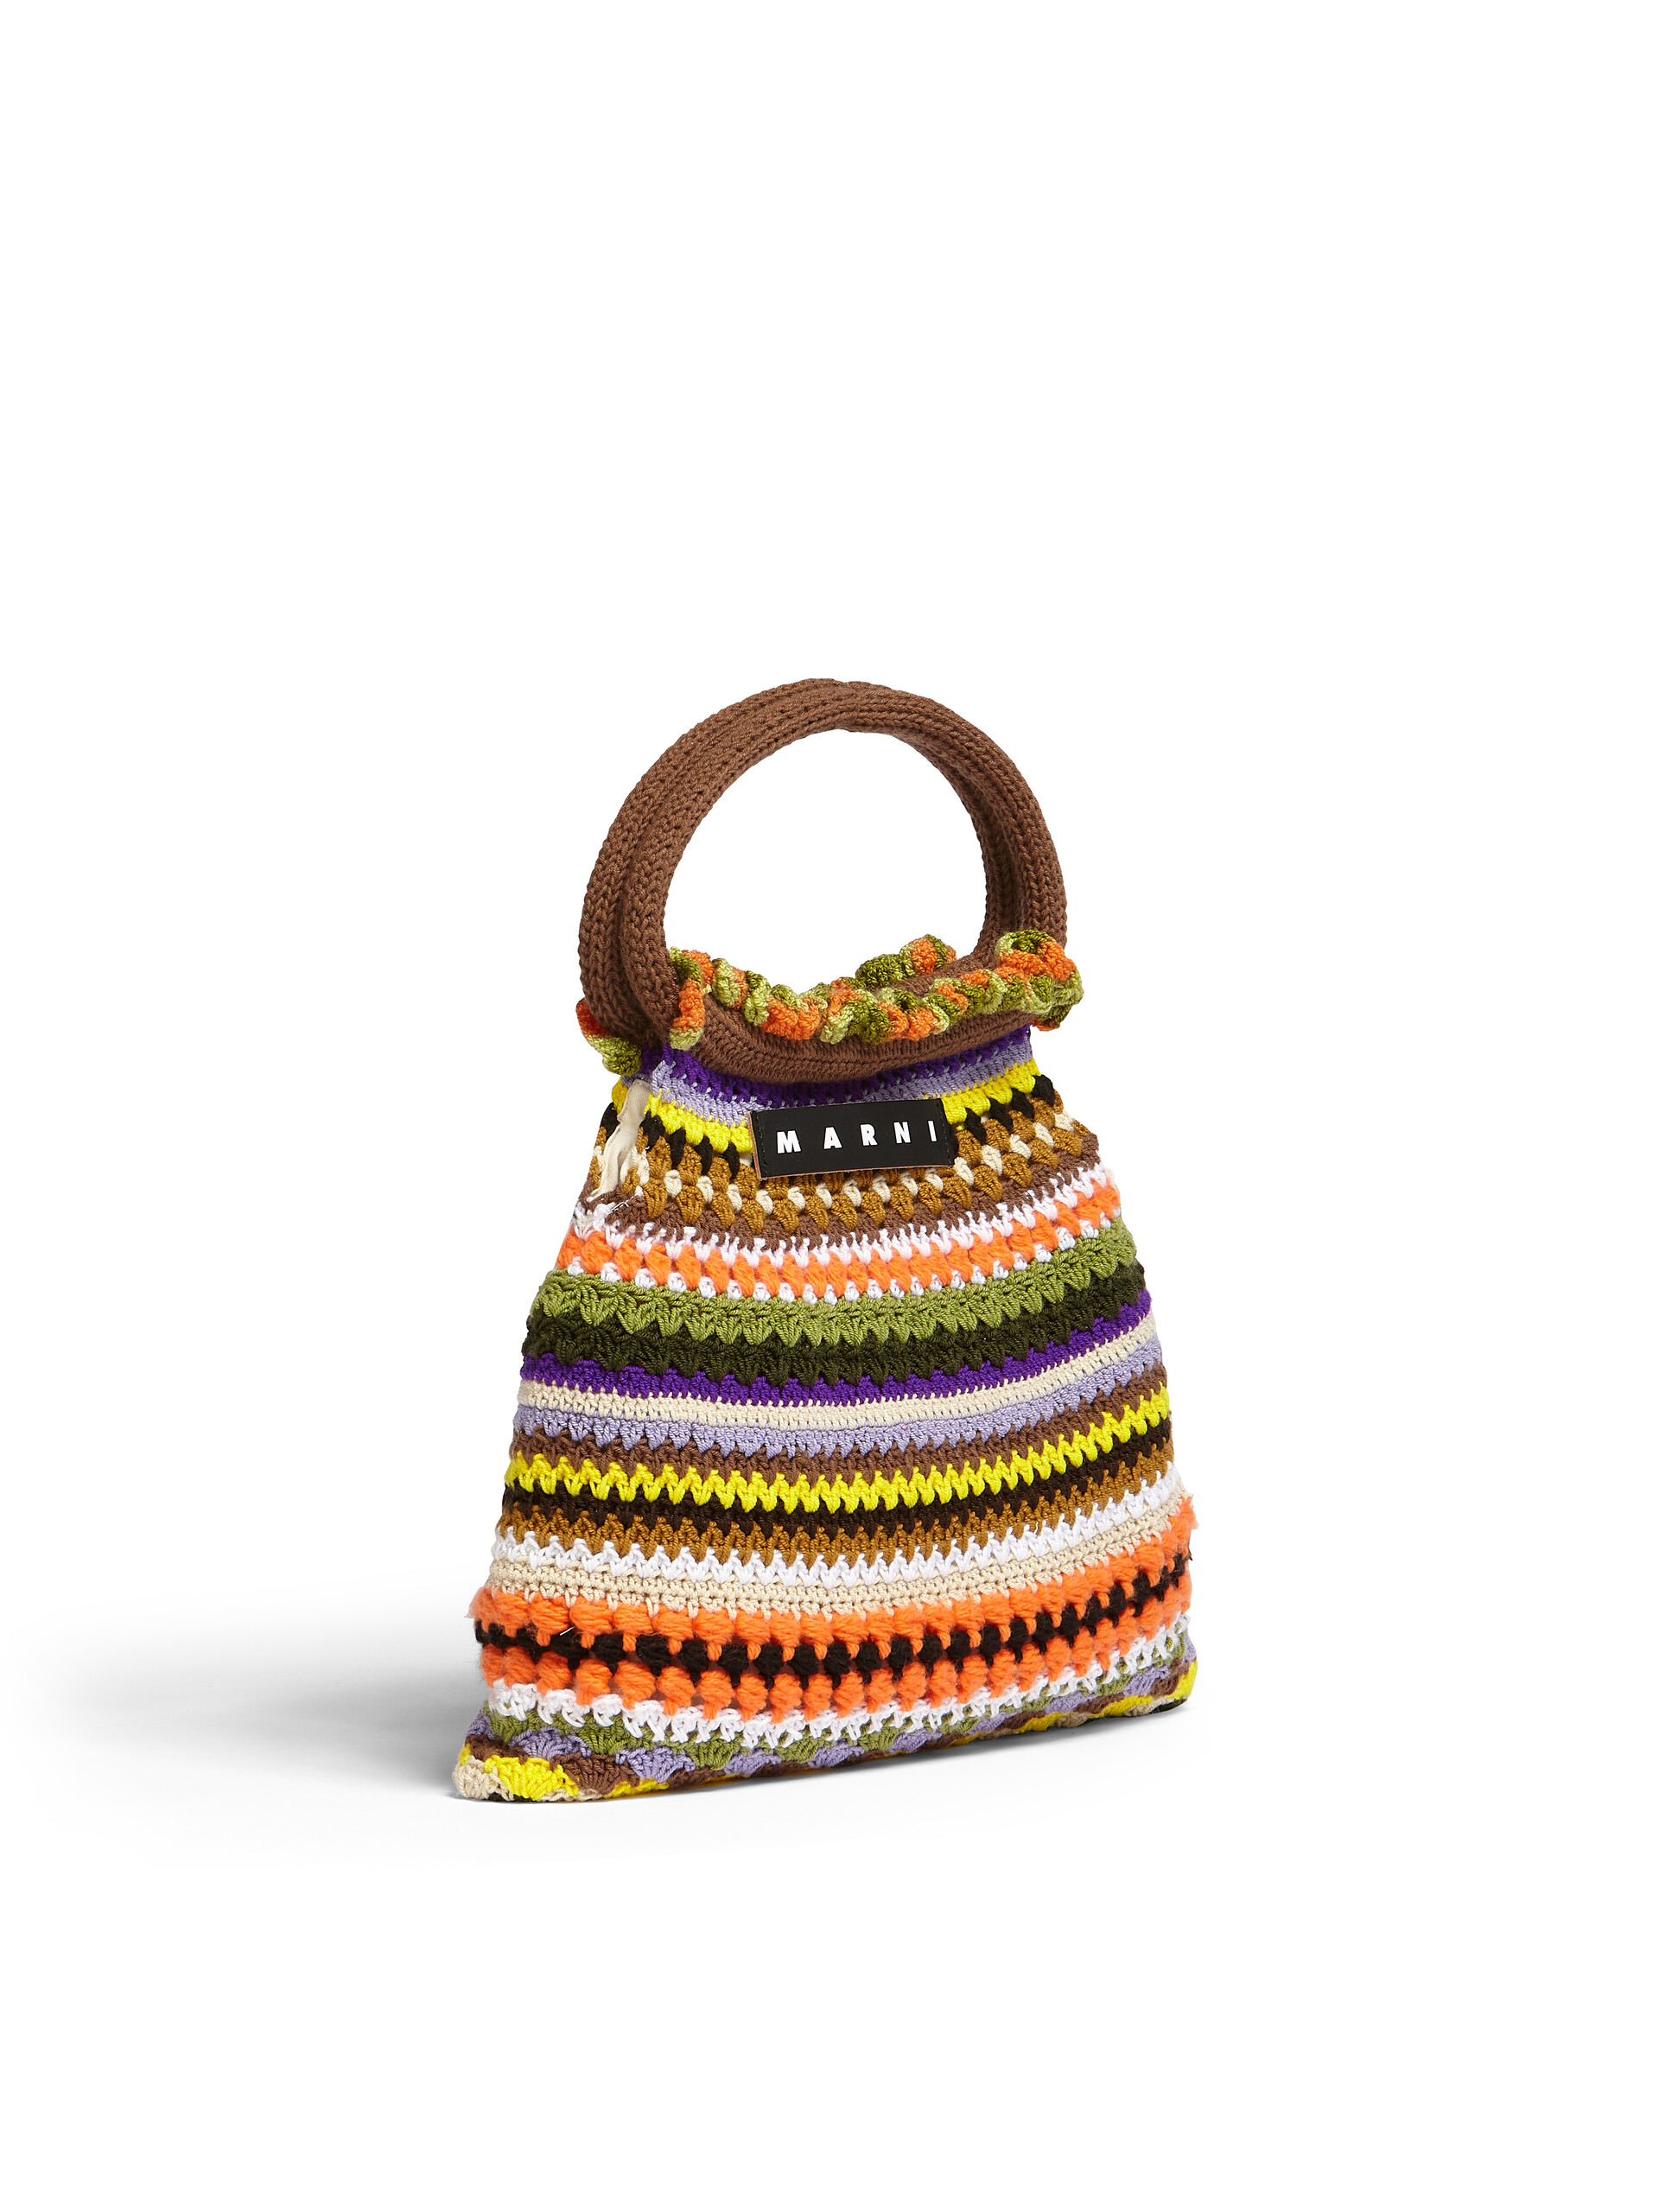 MARNI MARKET GRANNY bag in brown crochet - Furniture - Image 2